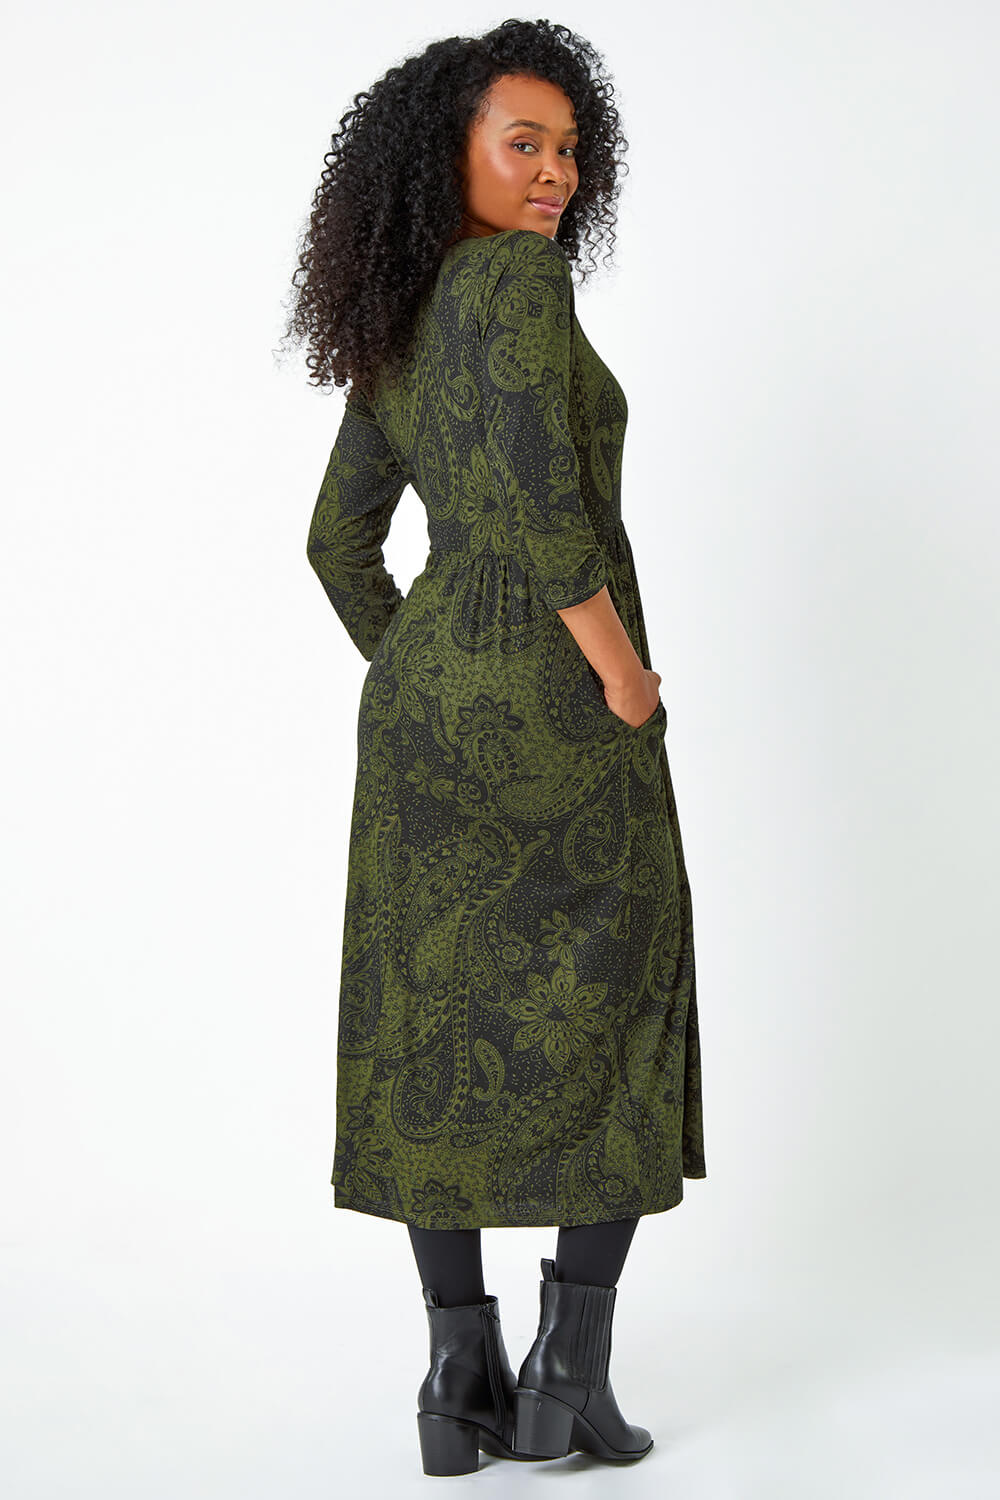 KHAKI Petite Paisley Print Ruched Midi Dress, Image 3 of 5